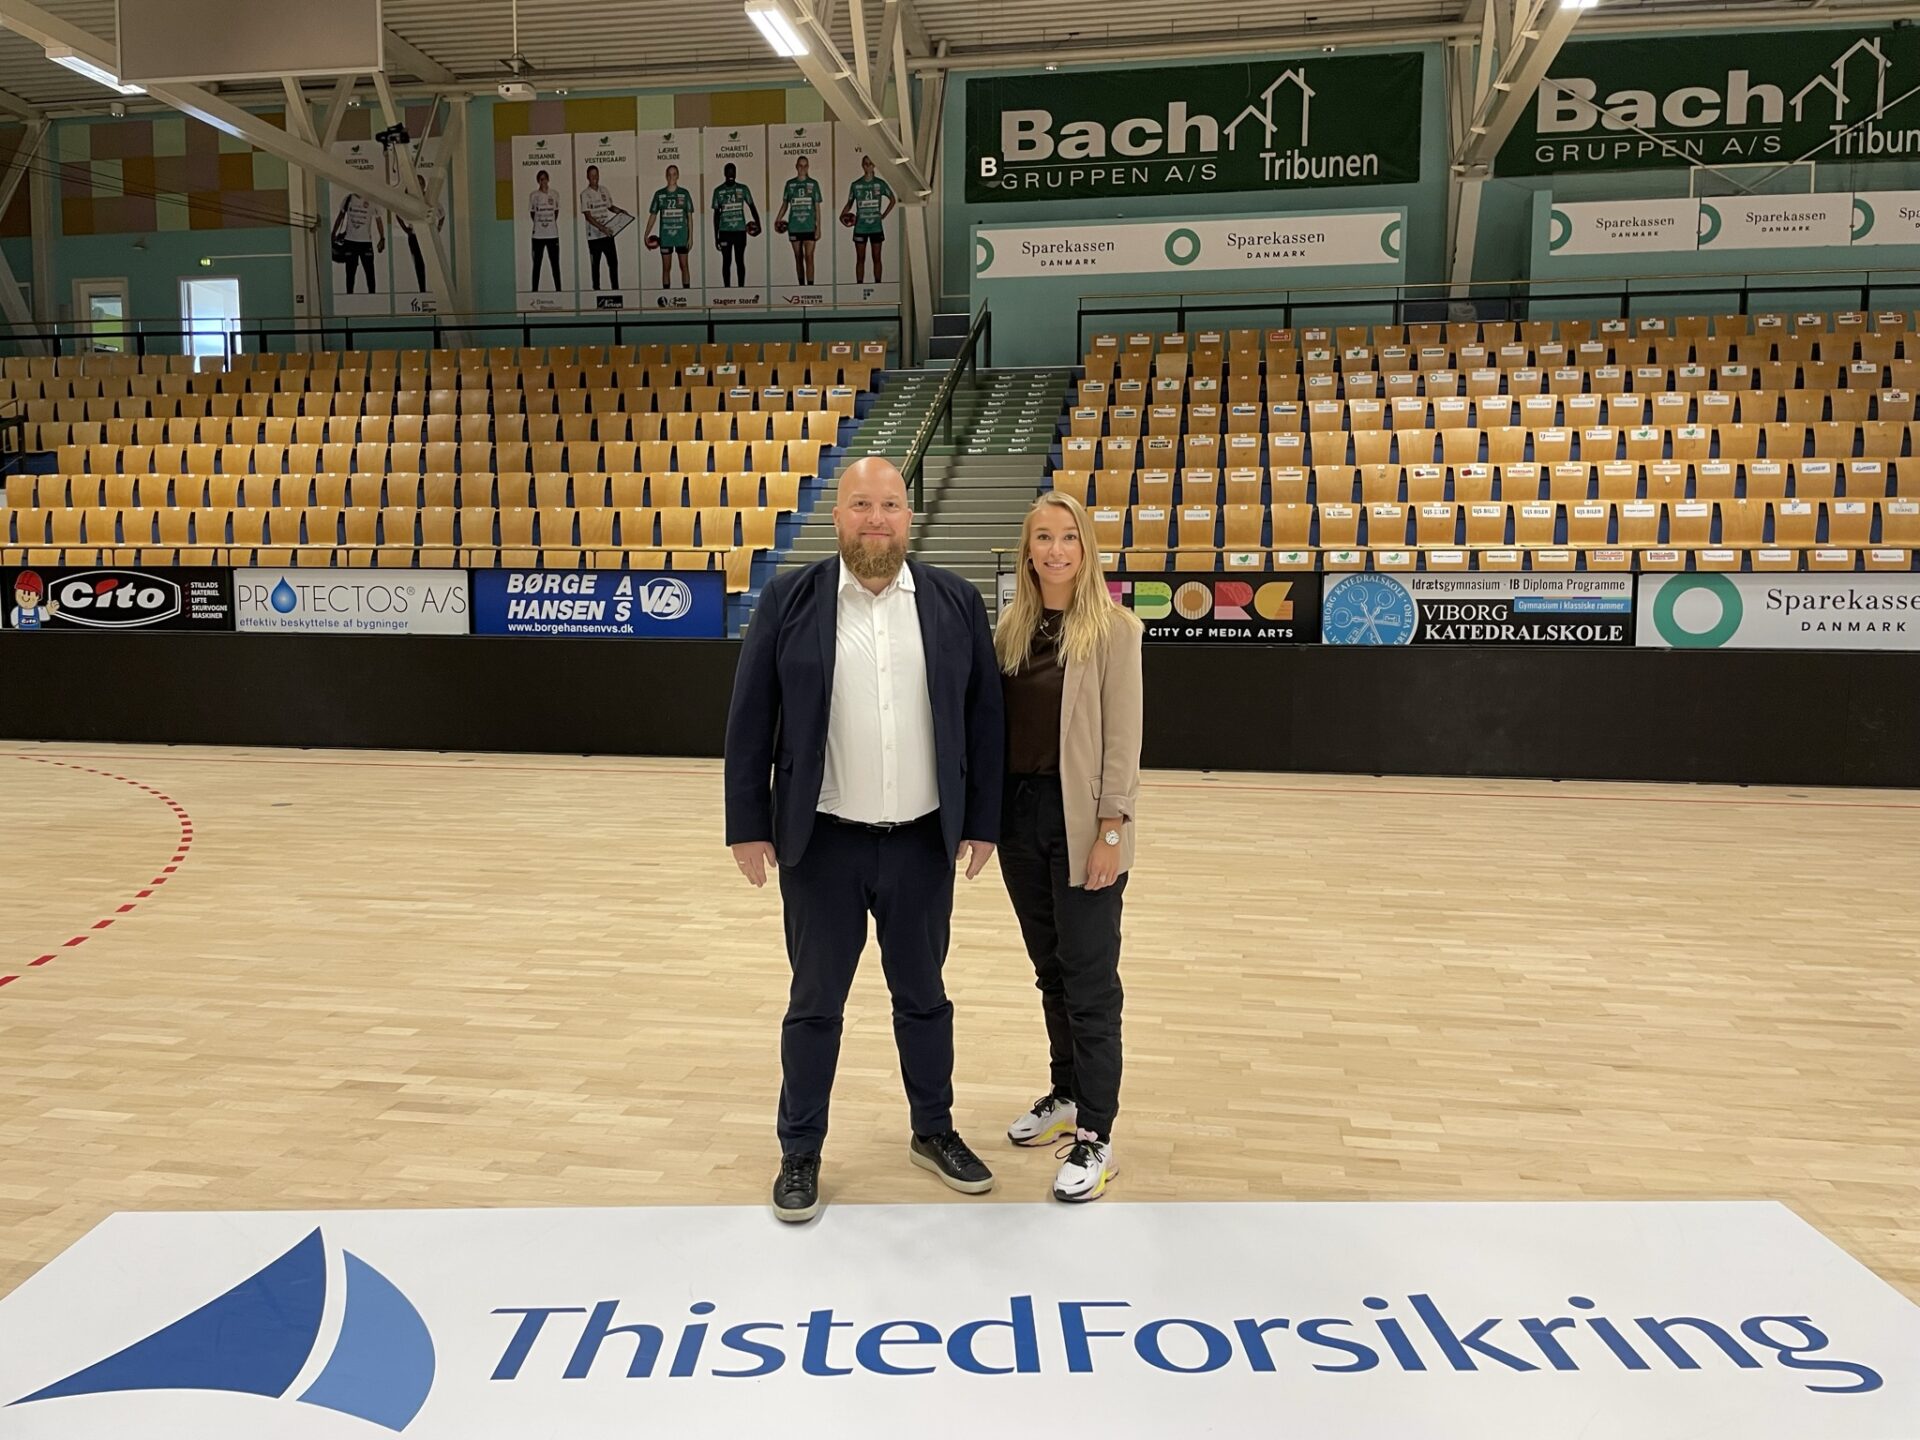 mumlende tuberkulose kaptajn Thisted Forsikring indgår 2-årig aftale med Viborg HK - Viborg Håndboldklub